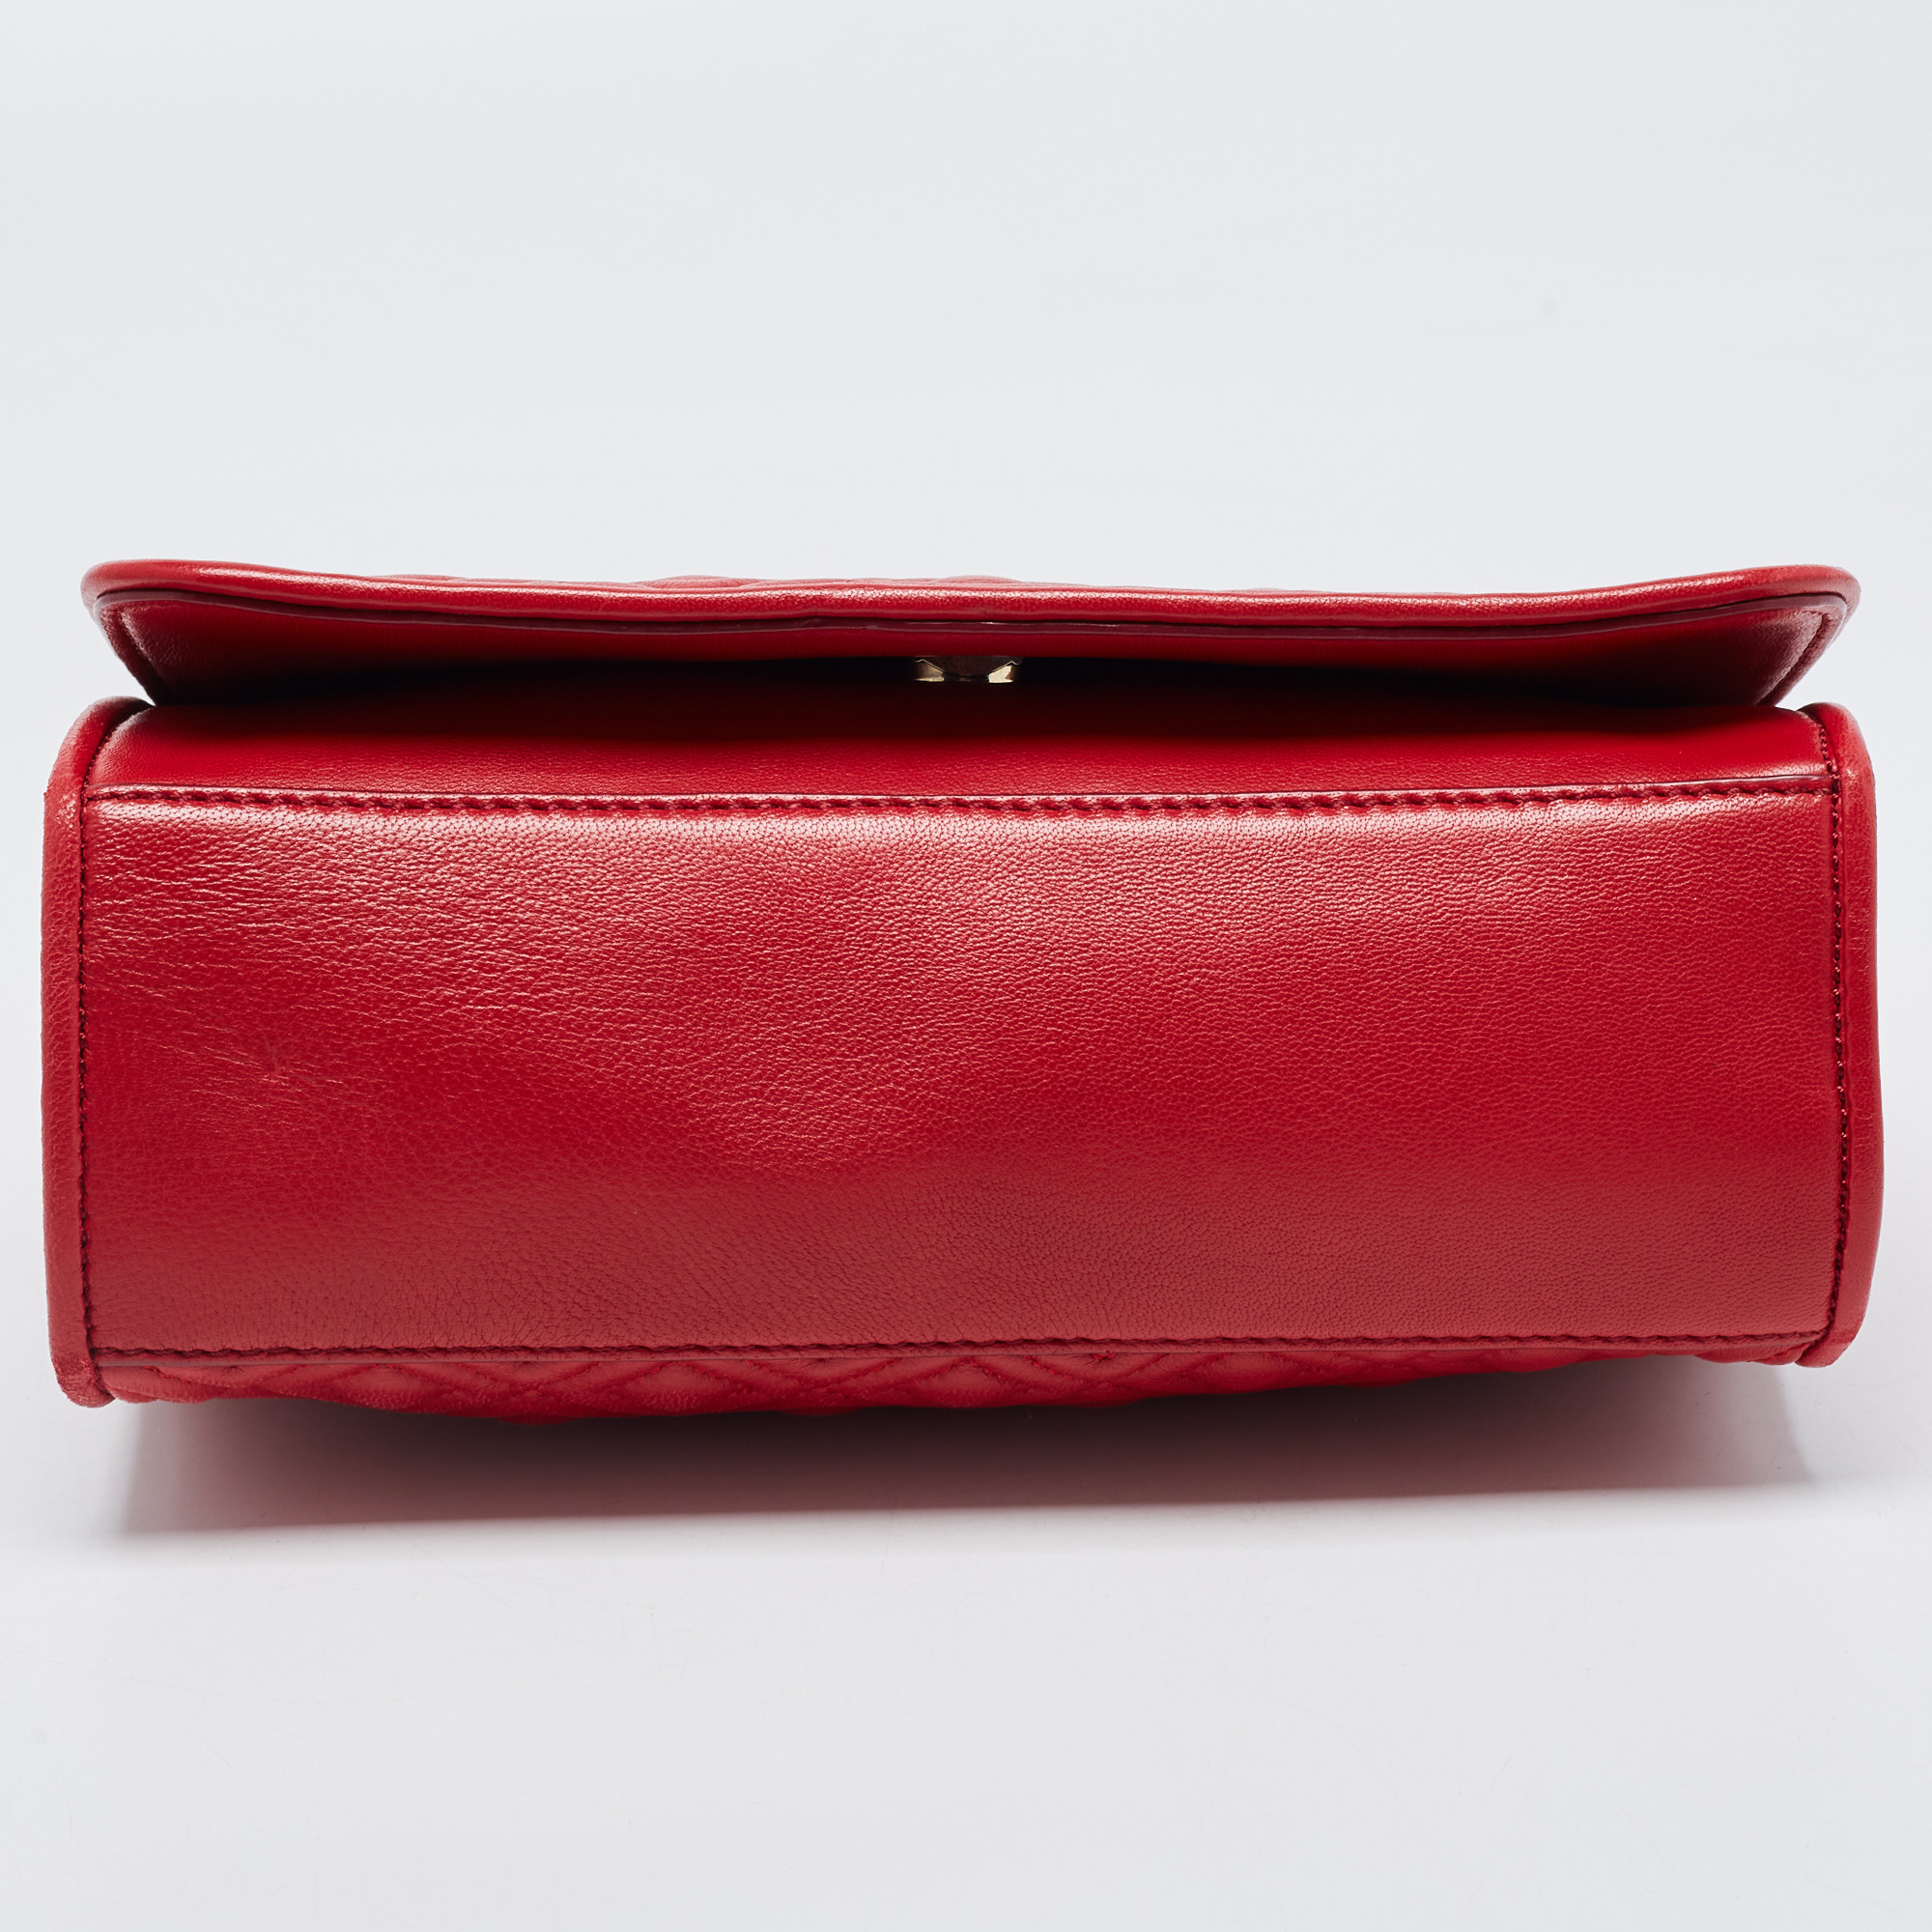 Tory Burch Red Leather Medium Fleming Shoulder Bag